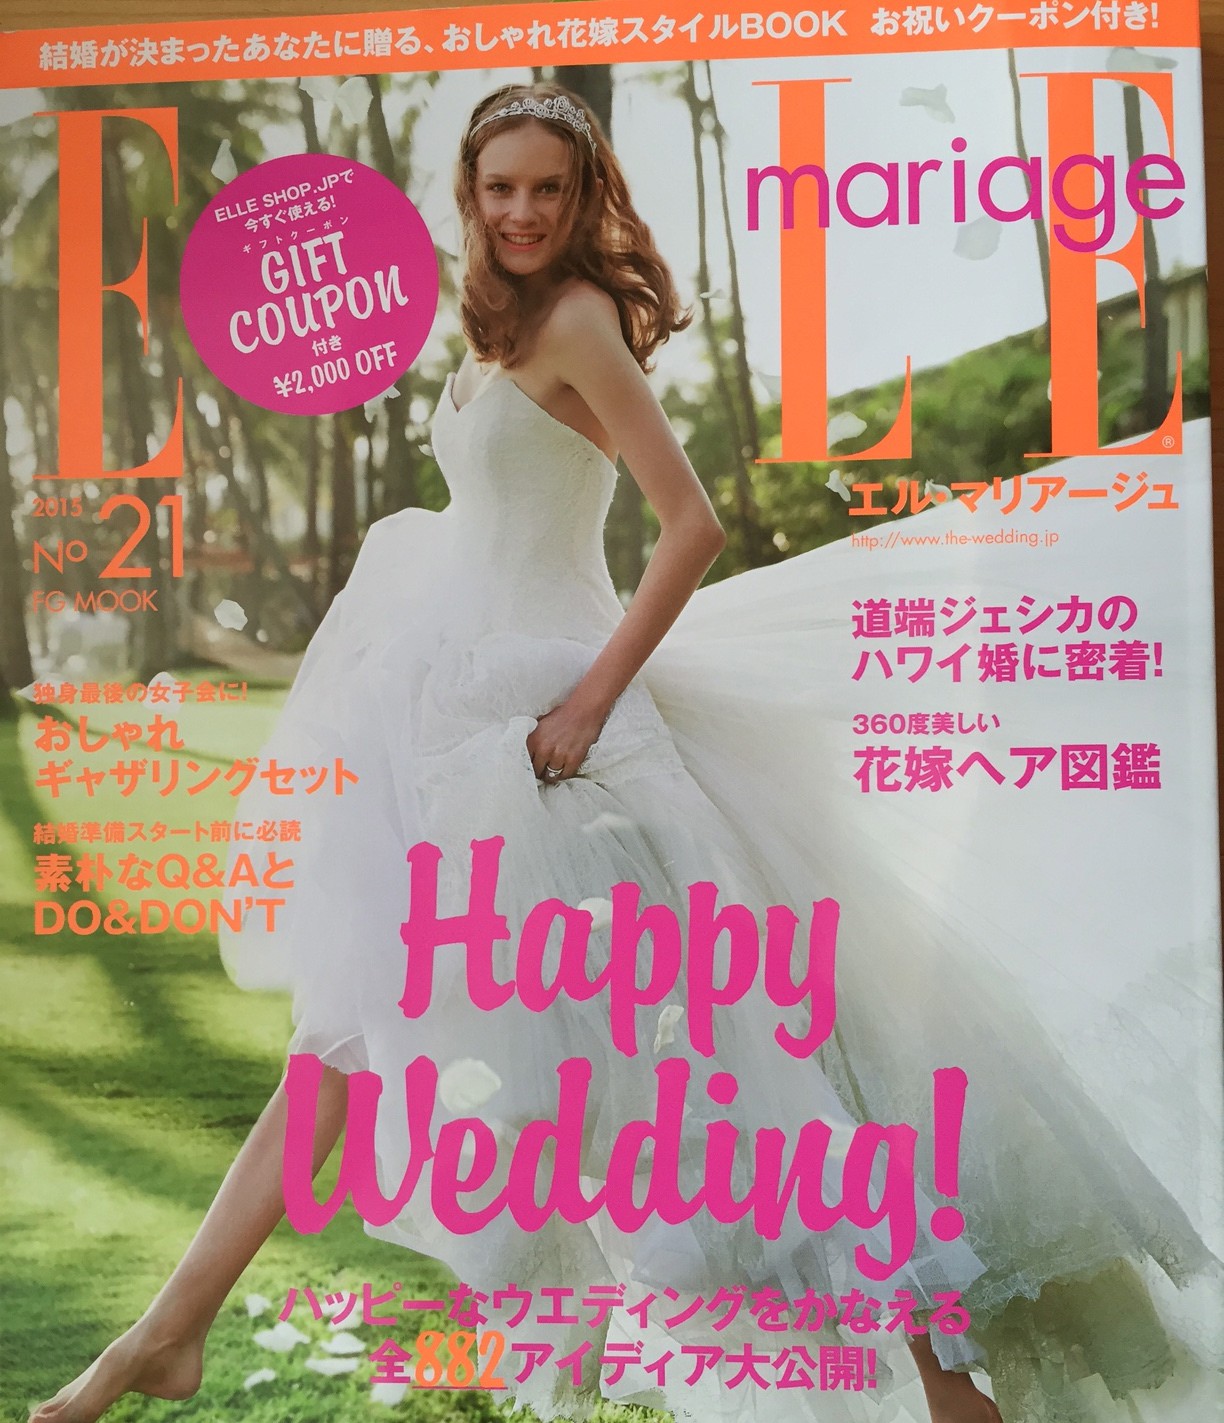 ELLE mariage 2015 No.21 3/20発売号掲載 | ウェディングドレスはLOVE